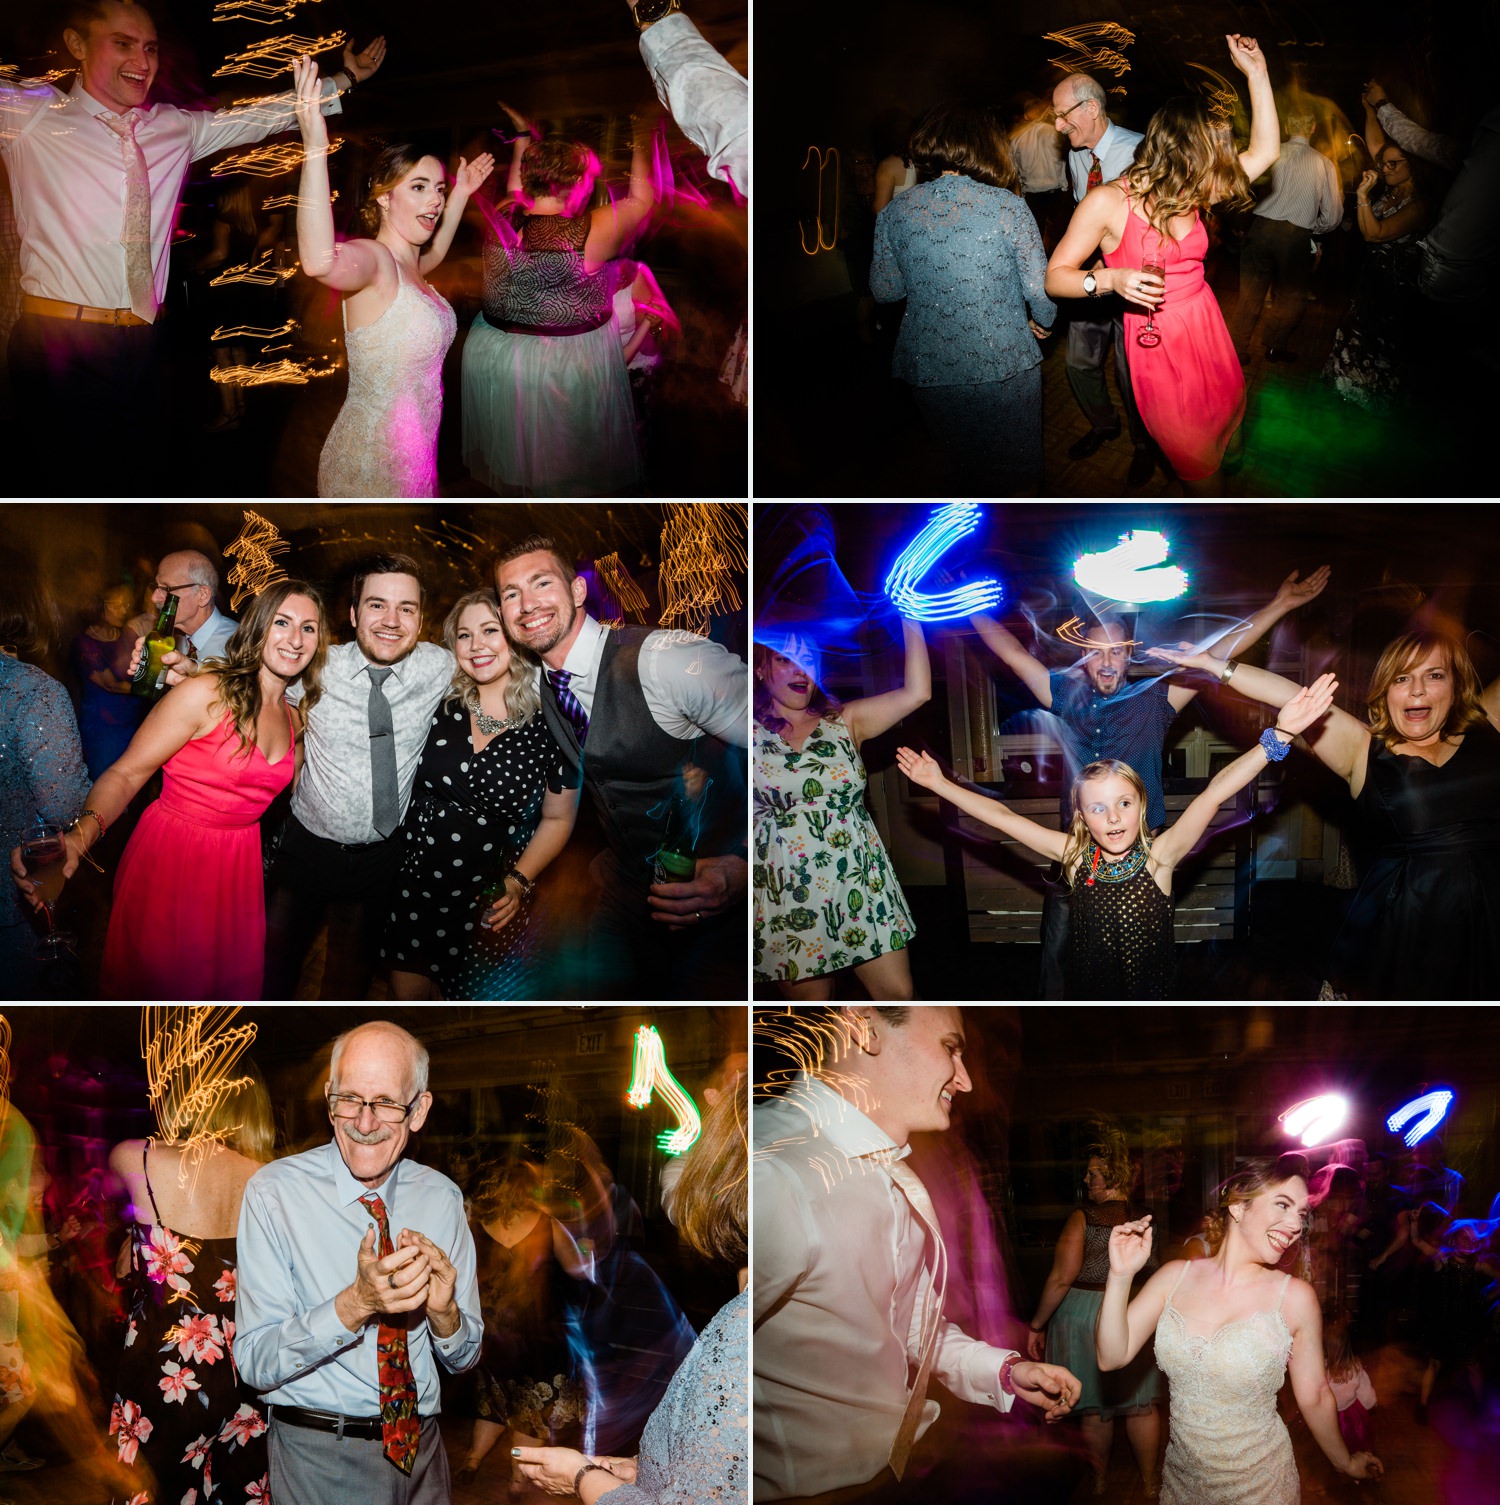 Dance party photos at a wedding at Woodland Park Zoo.